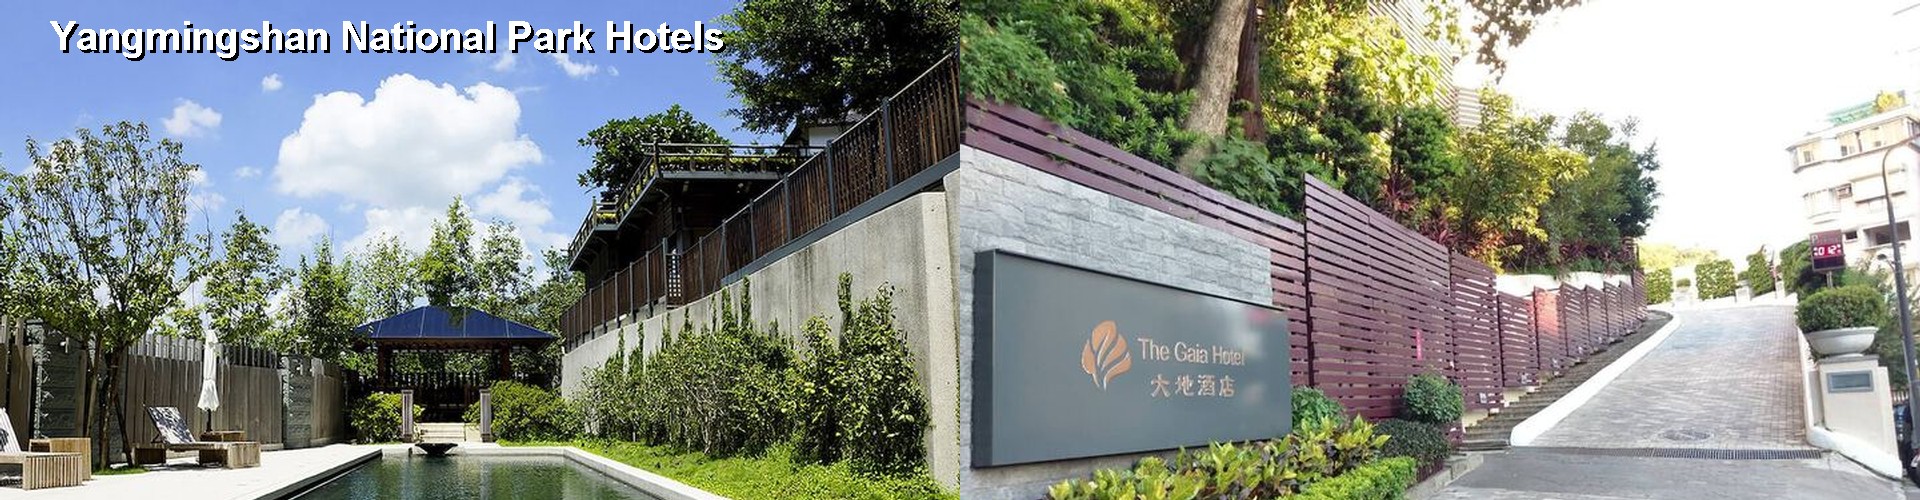 5 Best Hotels near Yangmingshan National Park